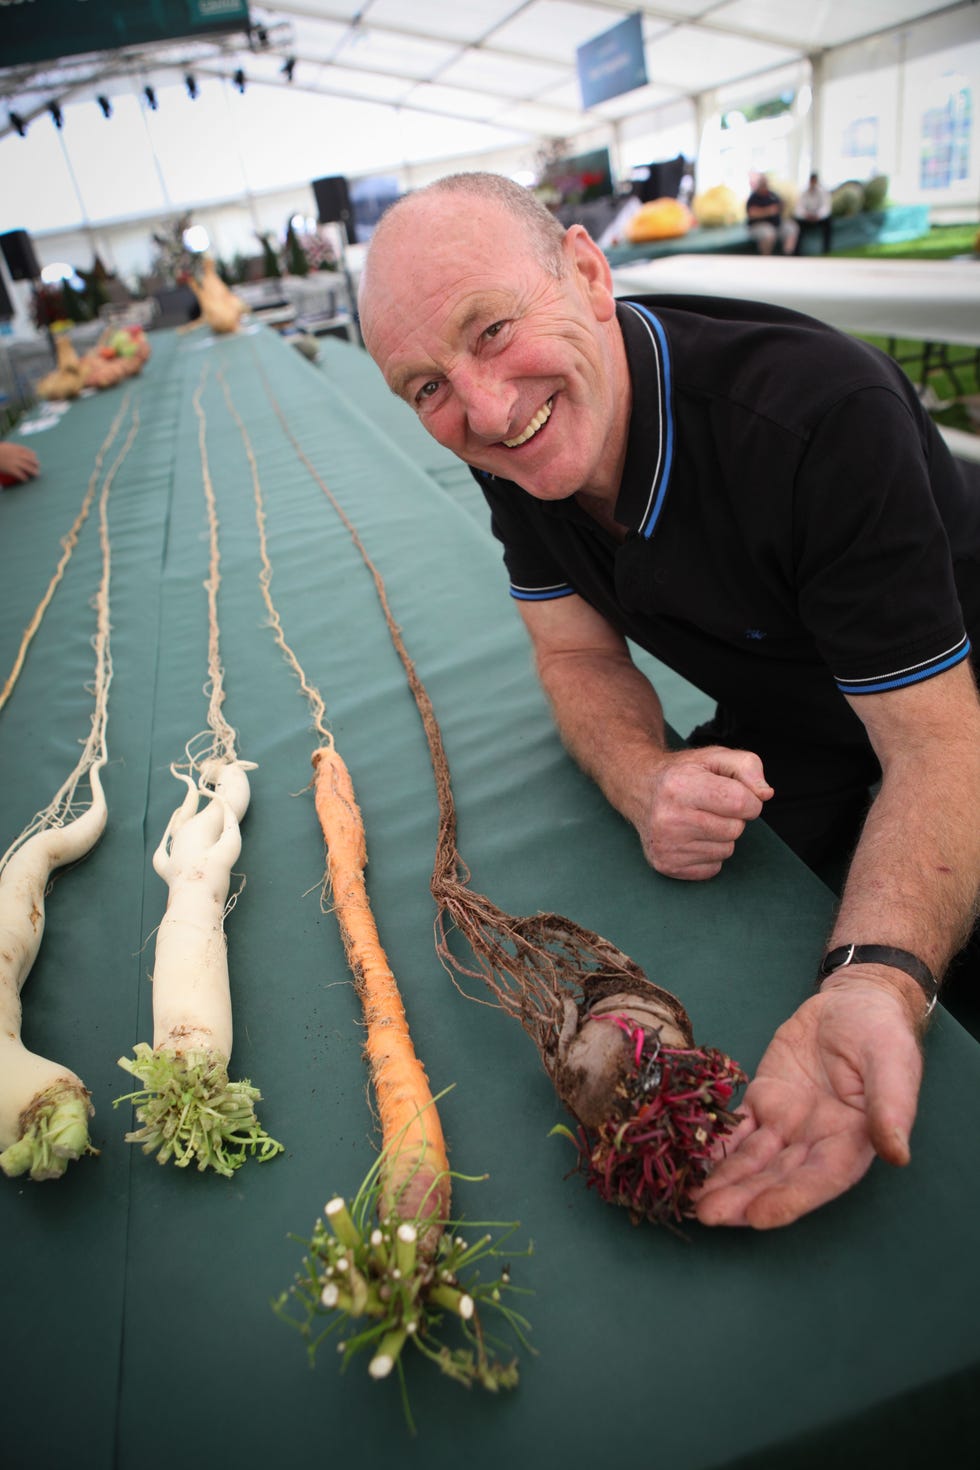 Joe Atherton with world record breaking beetroot, carrot and radish